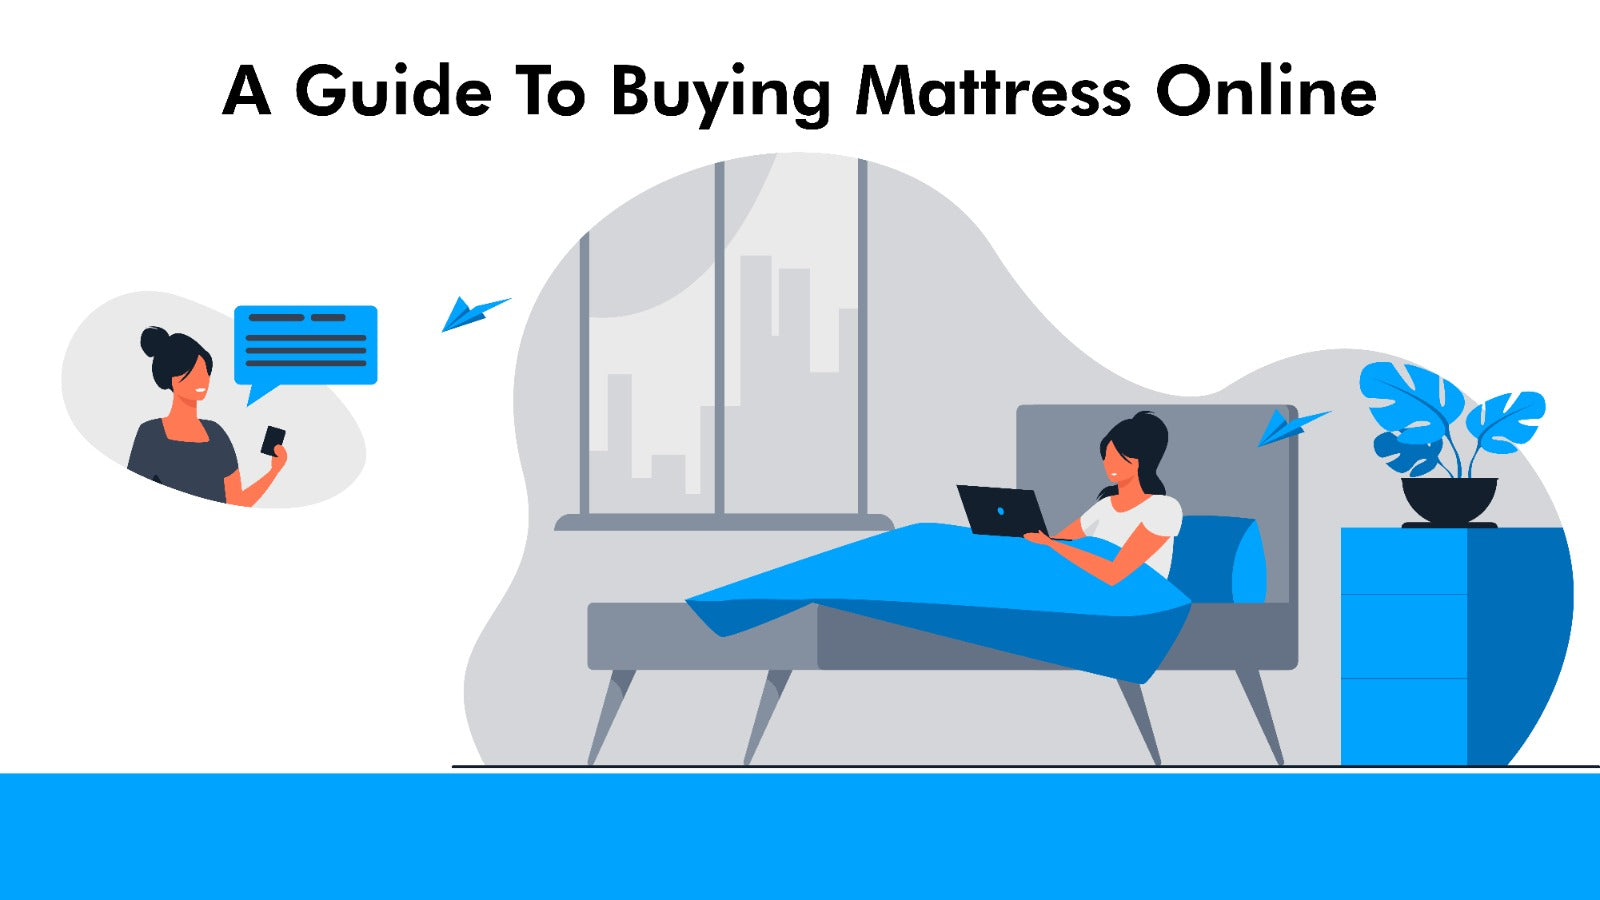 online mattress retail is hurting retail stores